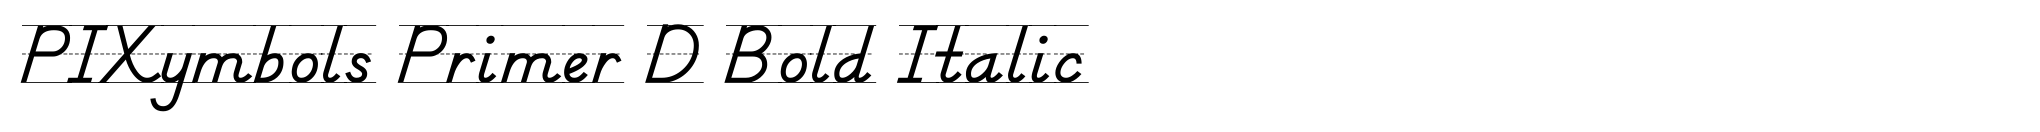 PIXymbols Primer D Bold Italic image